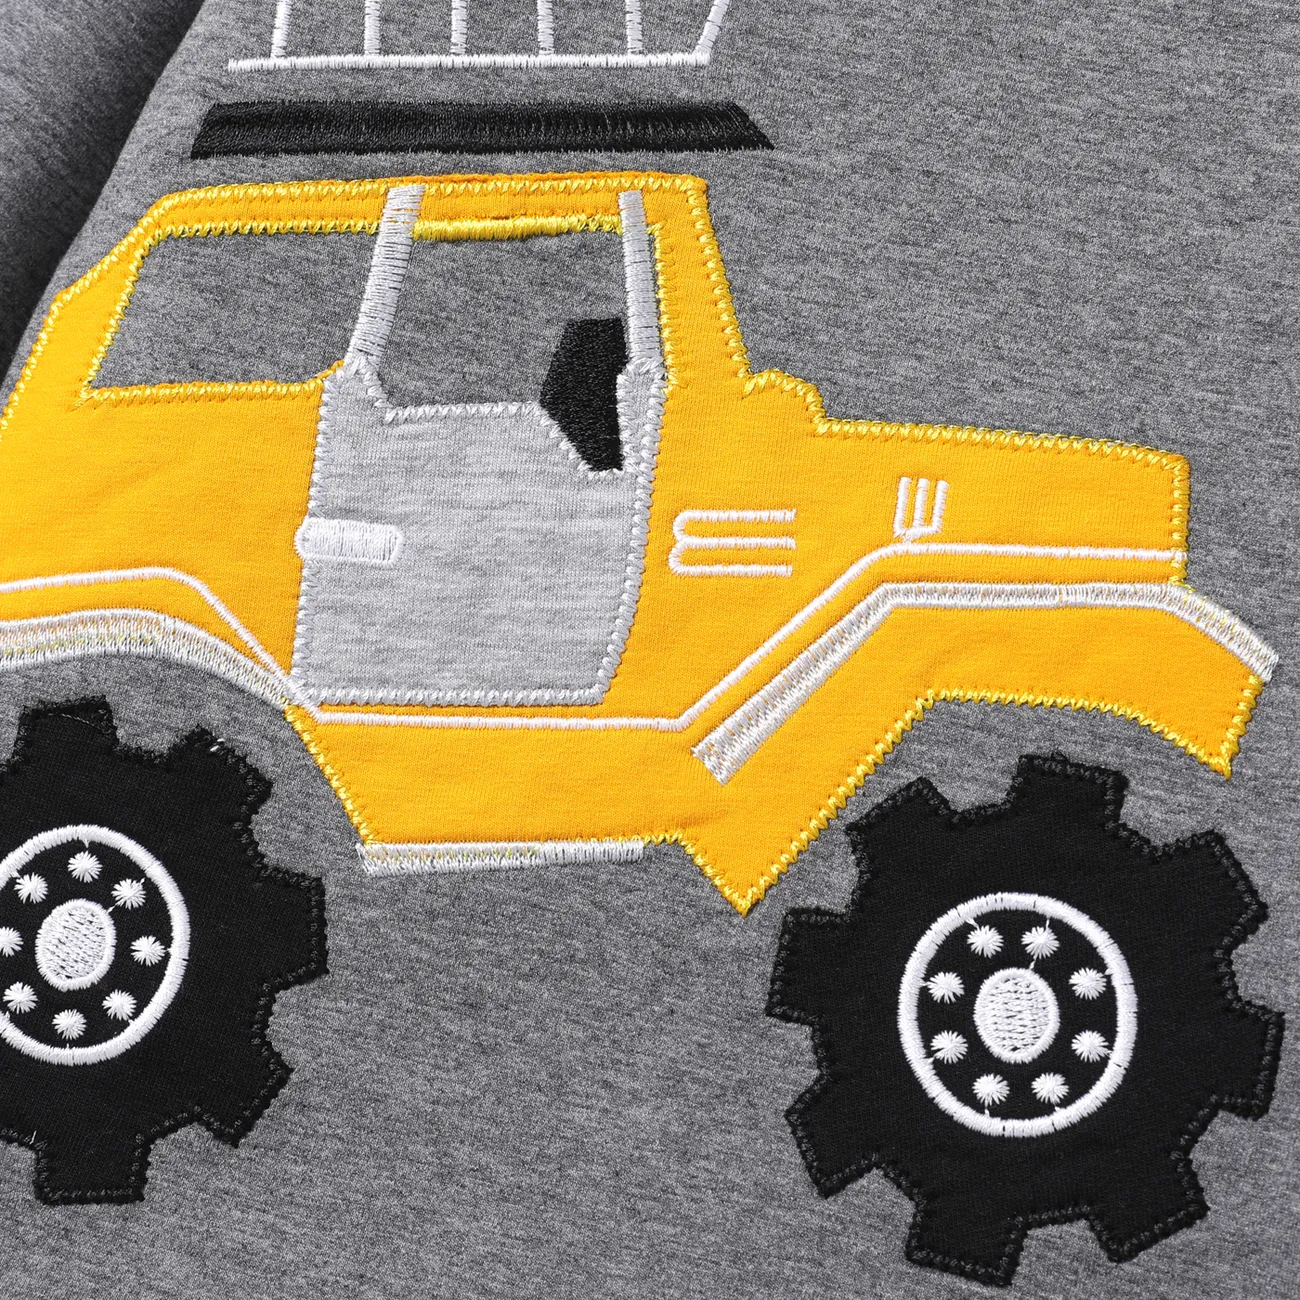 2pcs Toddler Boy Vehicle print sweatshirt and Solid color pant set Grey big image 1